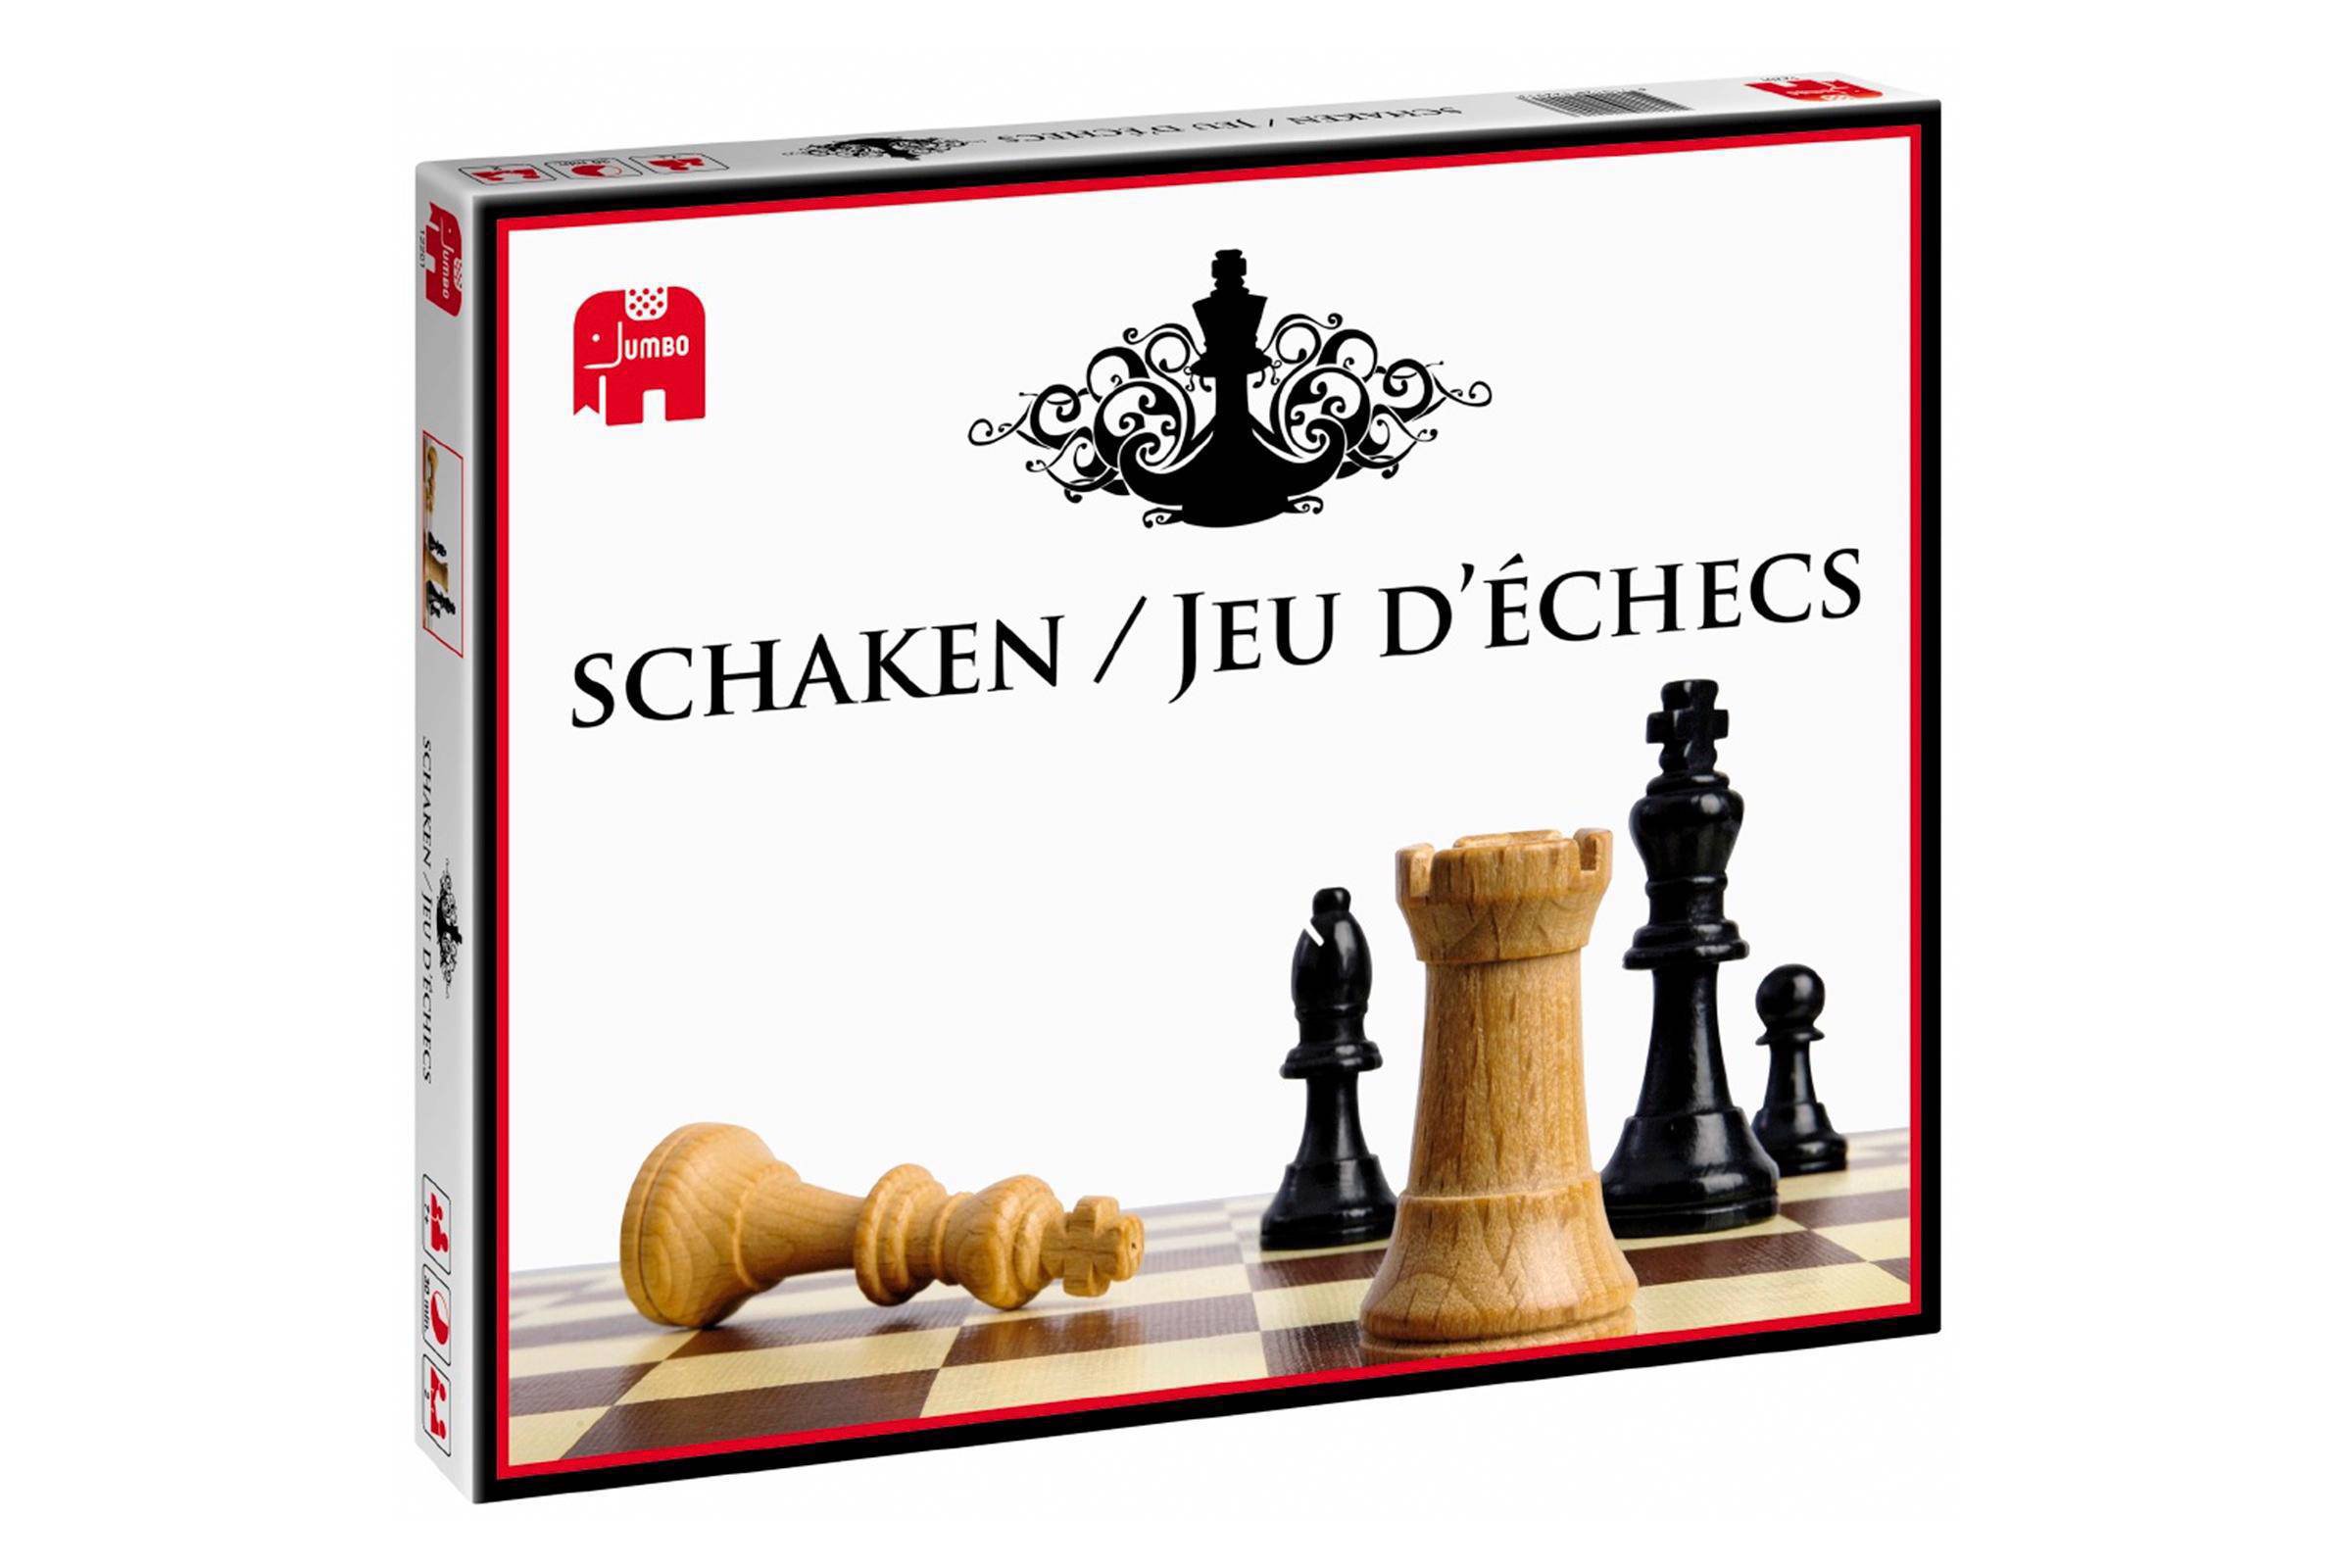 Jumbo Chess Set